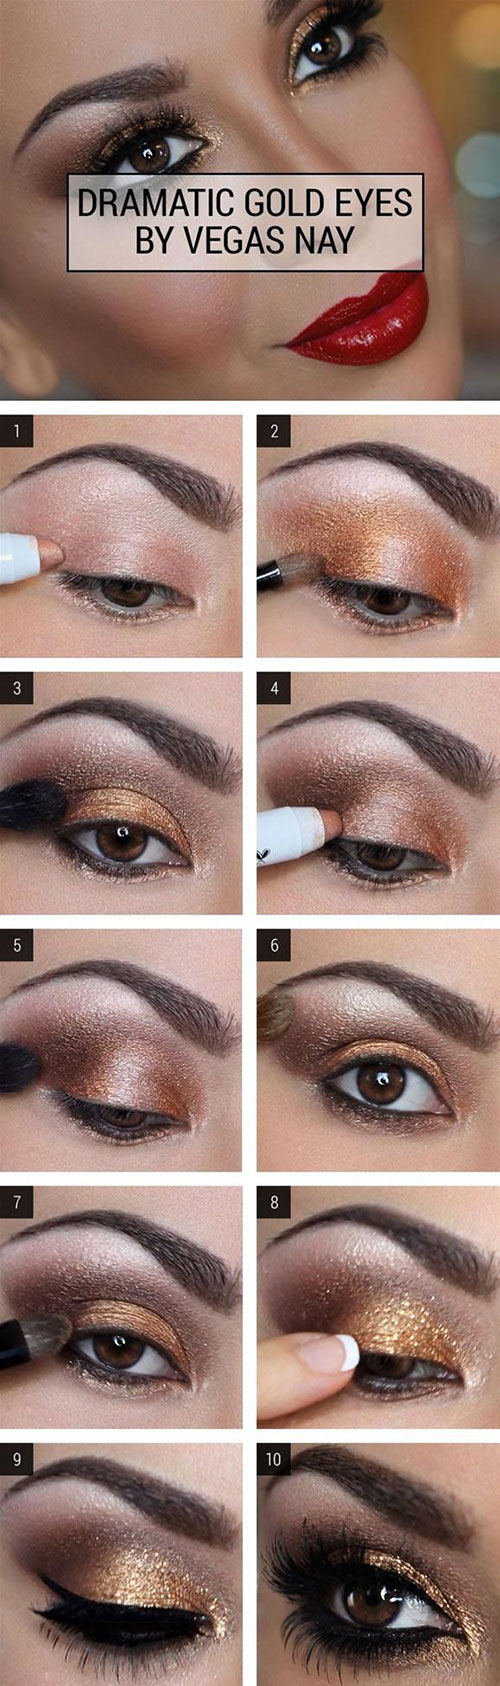 Brown Eyes Smokey Eye Makeup How To Do Smokey Eye Makeup Top 10 Tutorial Pictures For 2019